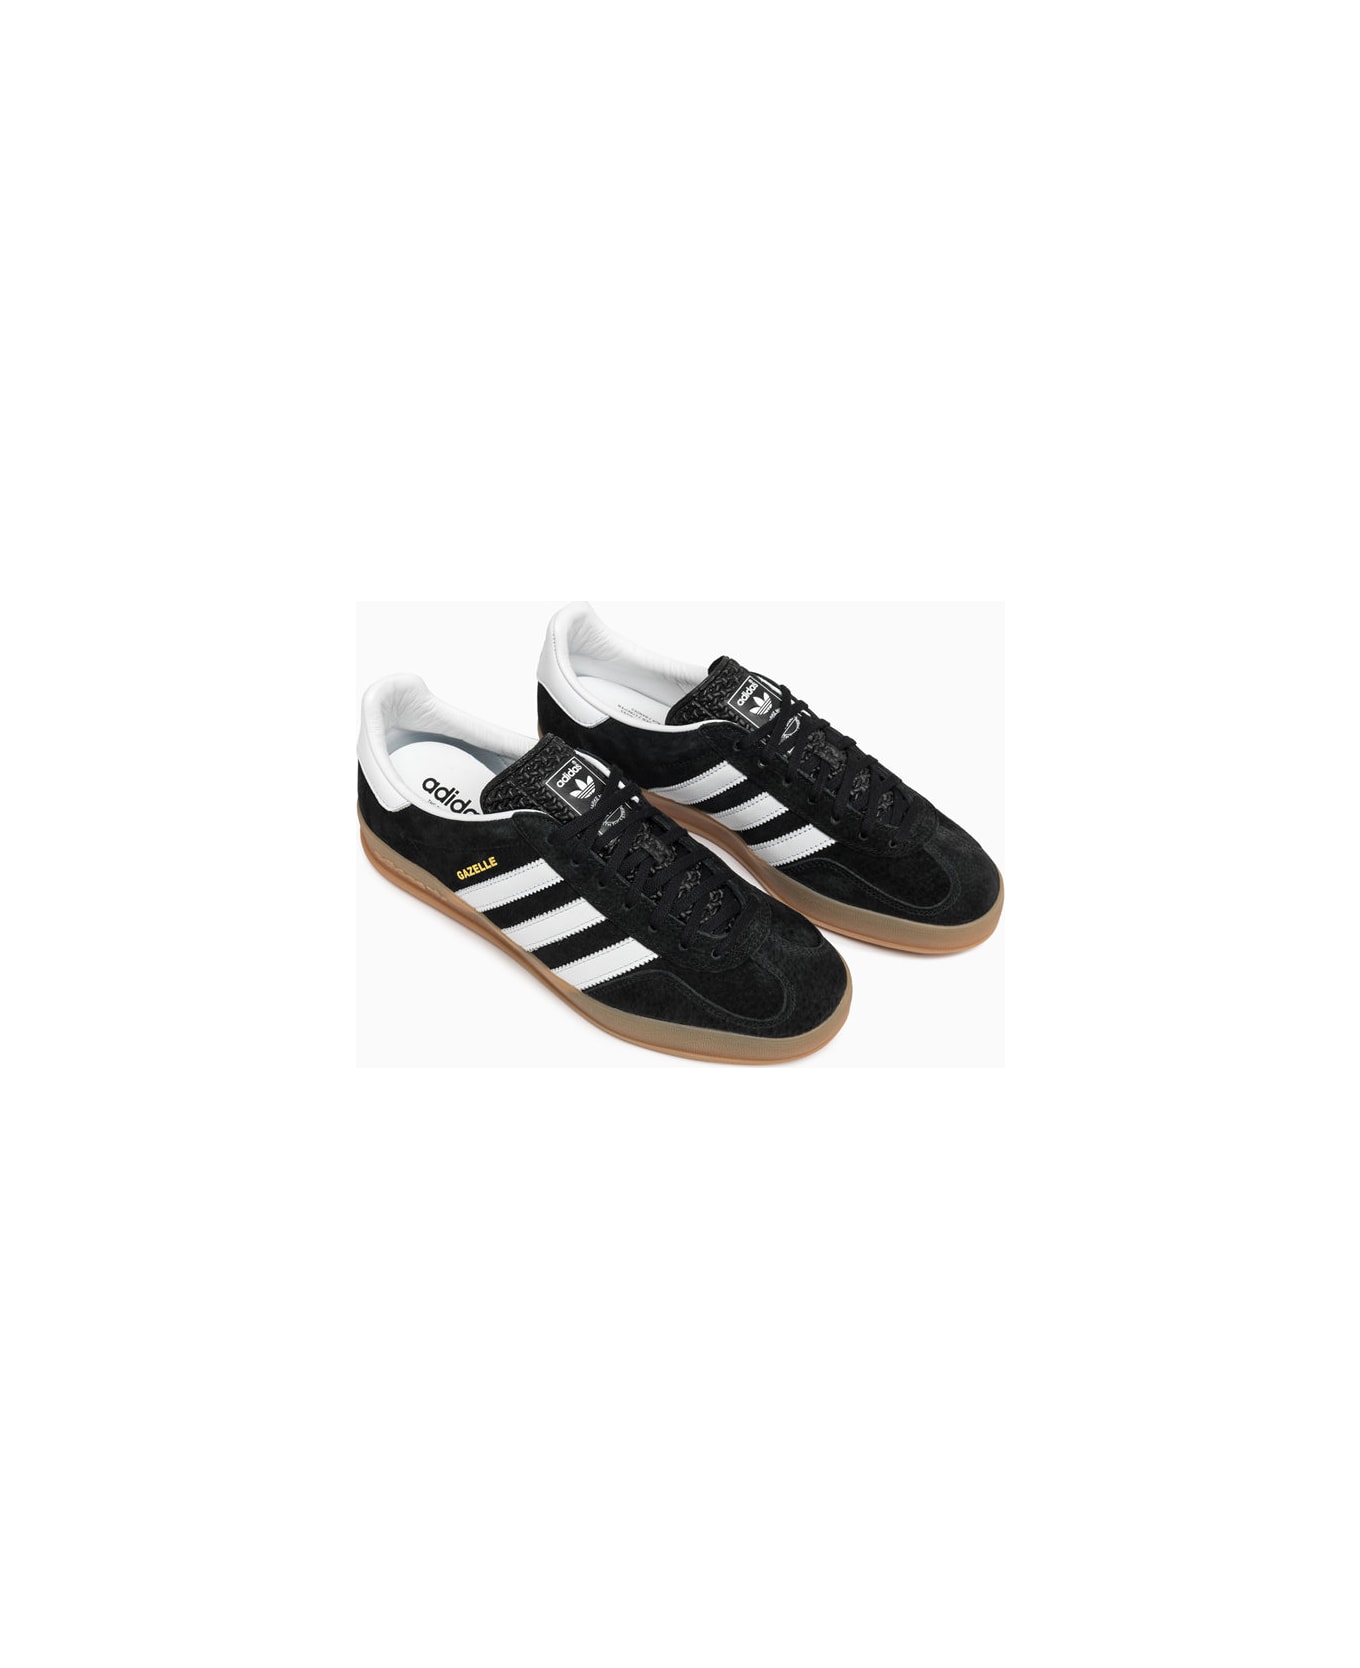 Adidas Originals Gazelle Indoor Sneakers H06259 - Cblack/ftwwht/cblack スニーカー